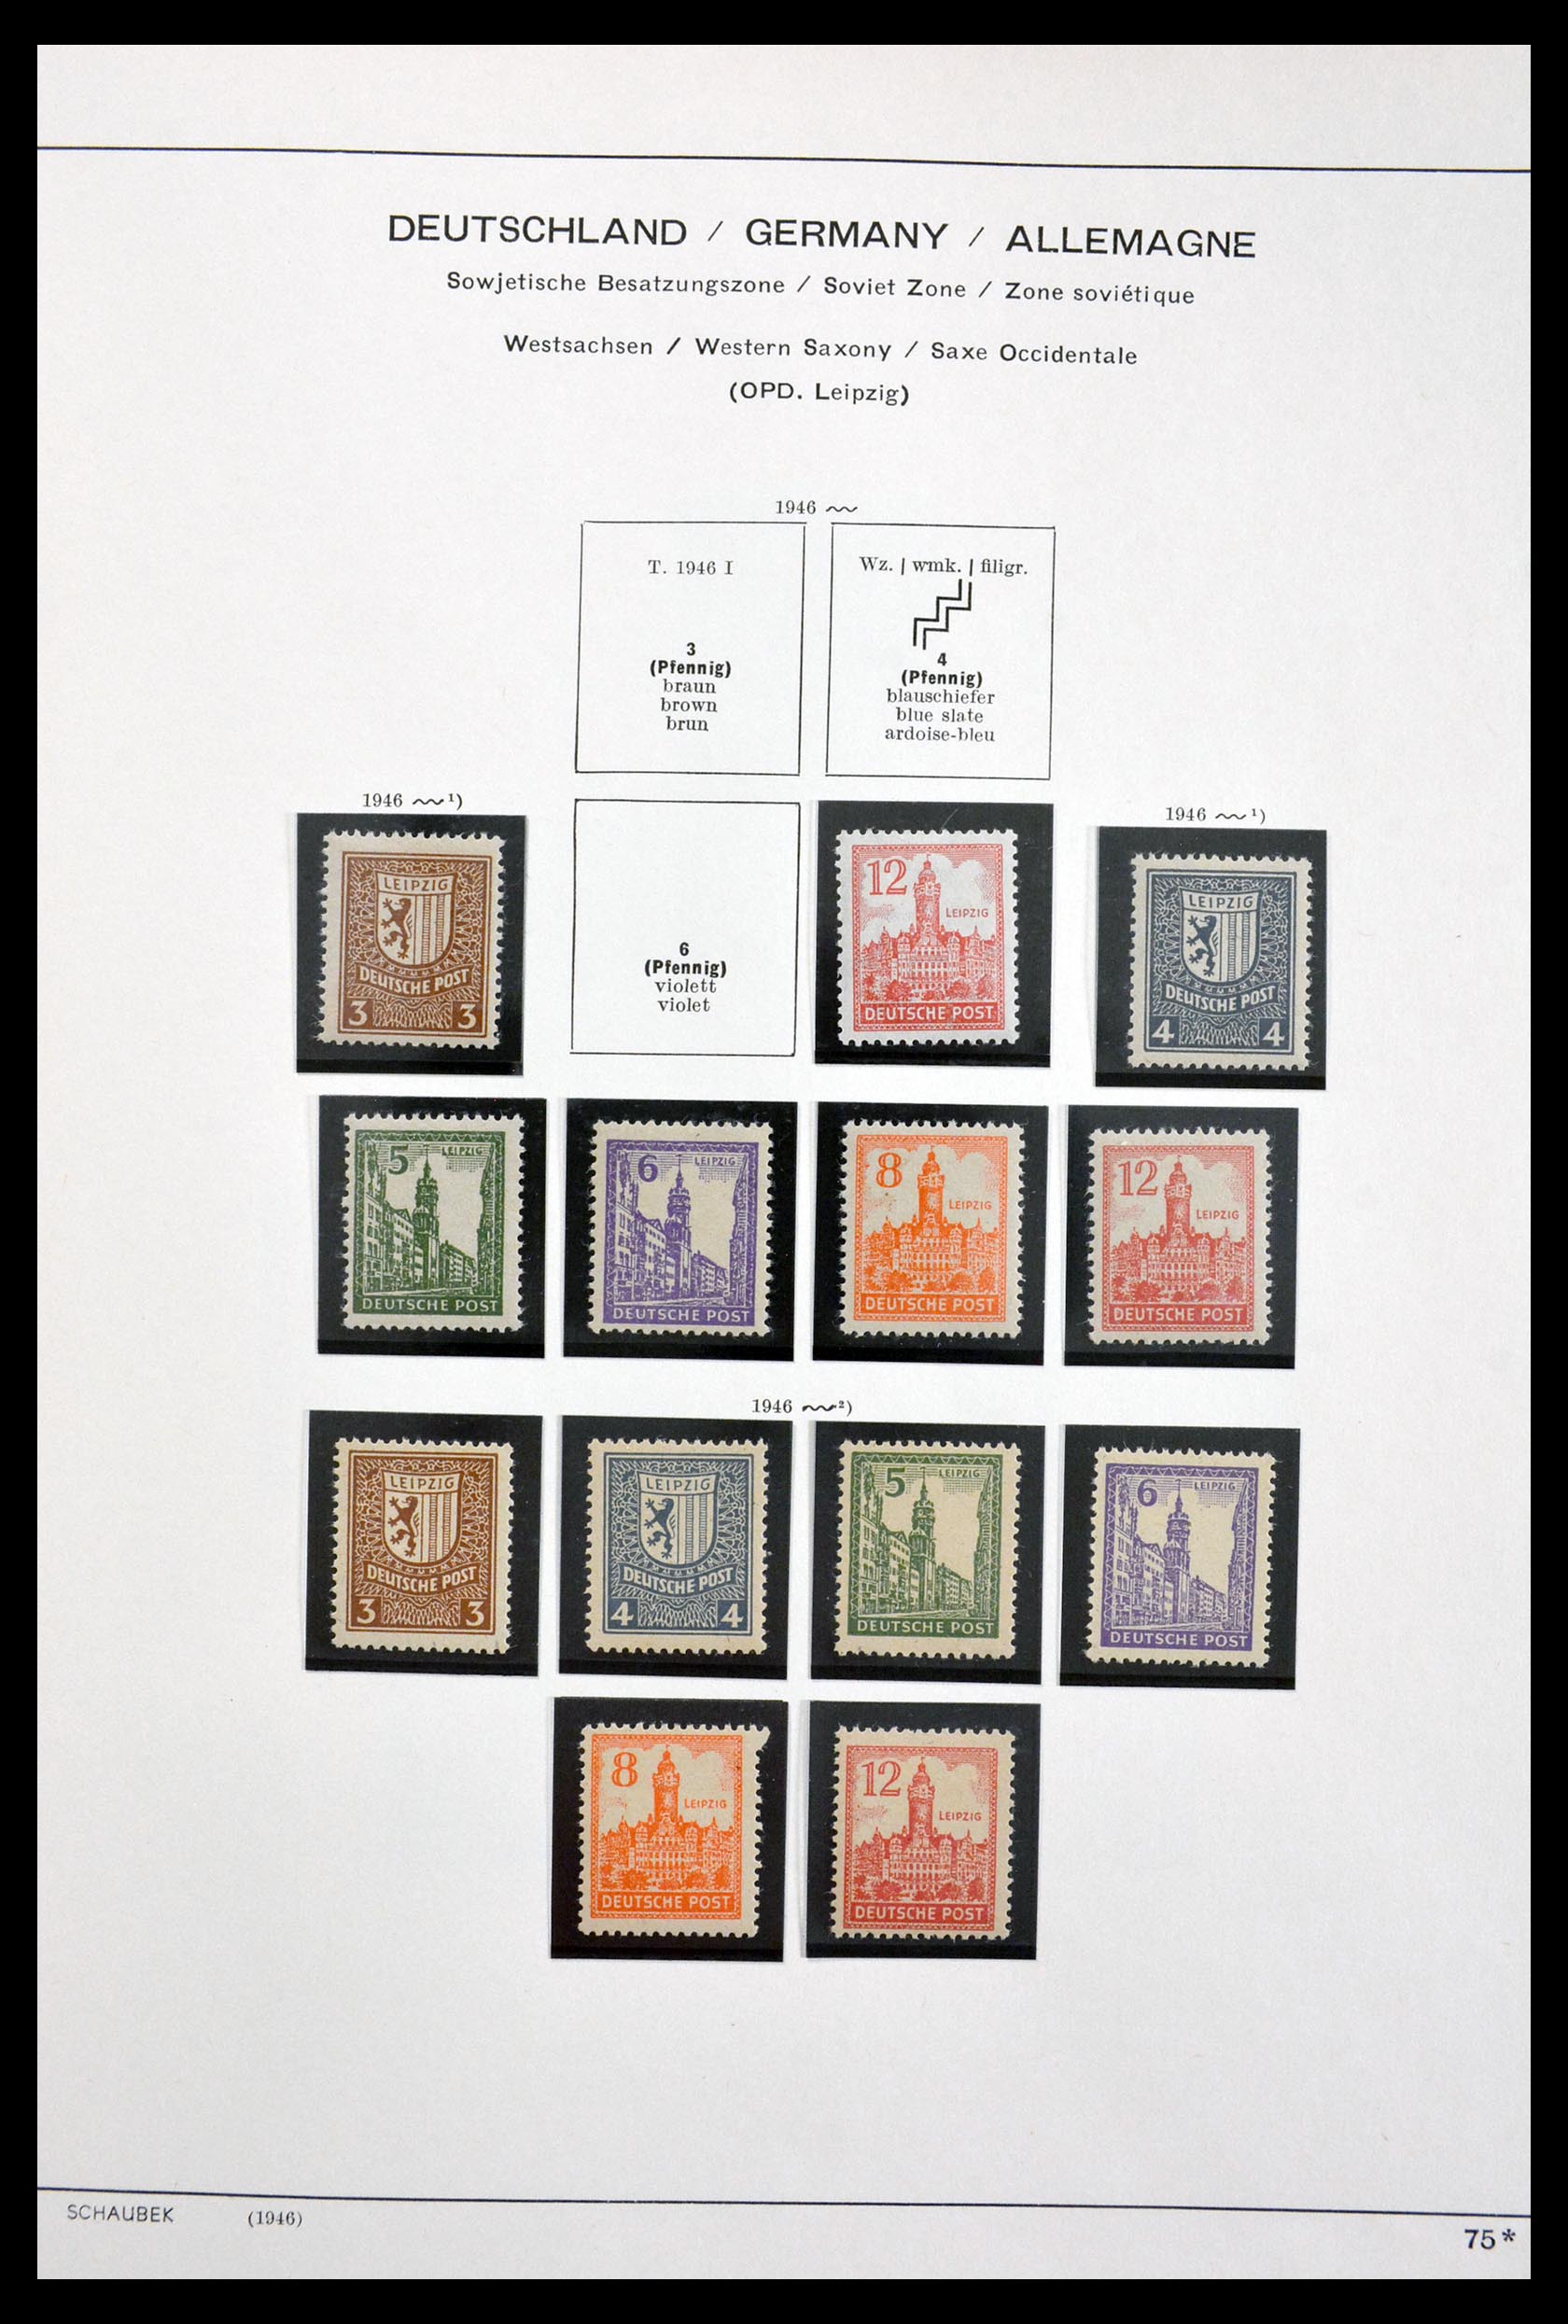 29731 013 - 29731 Local stamps Sovjetzone 1945-1949.